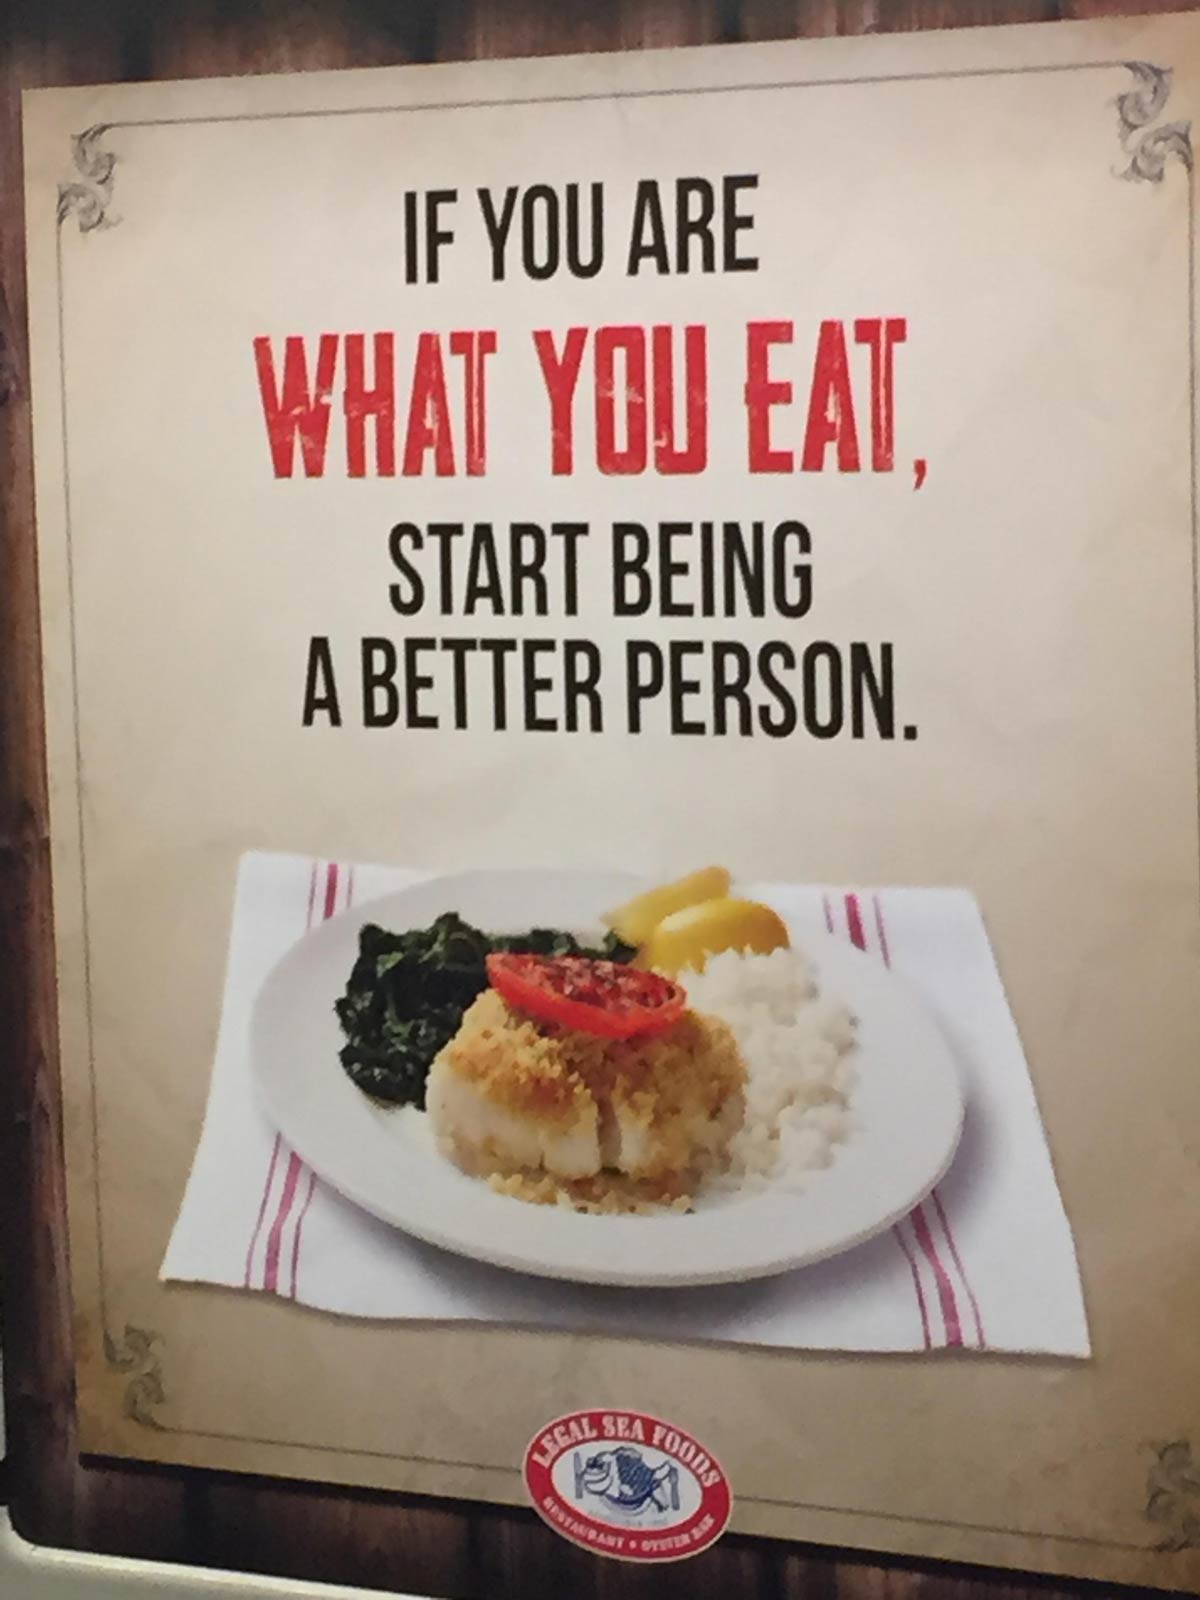 Eat better people